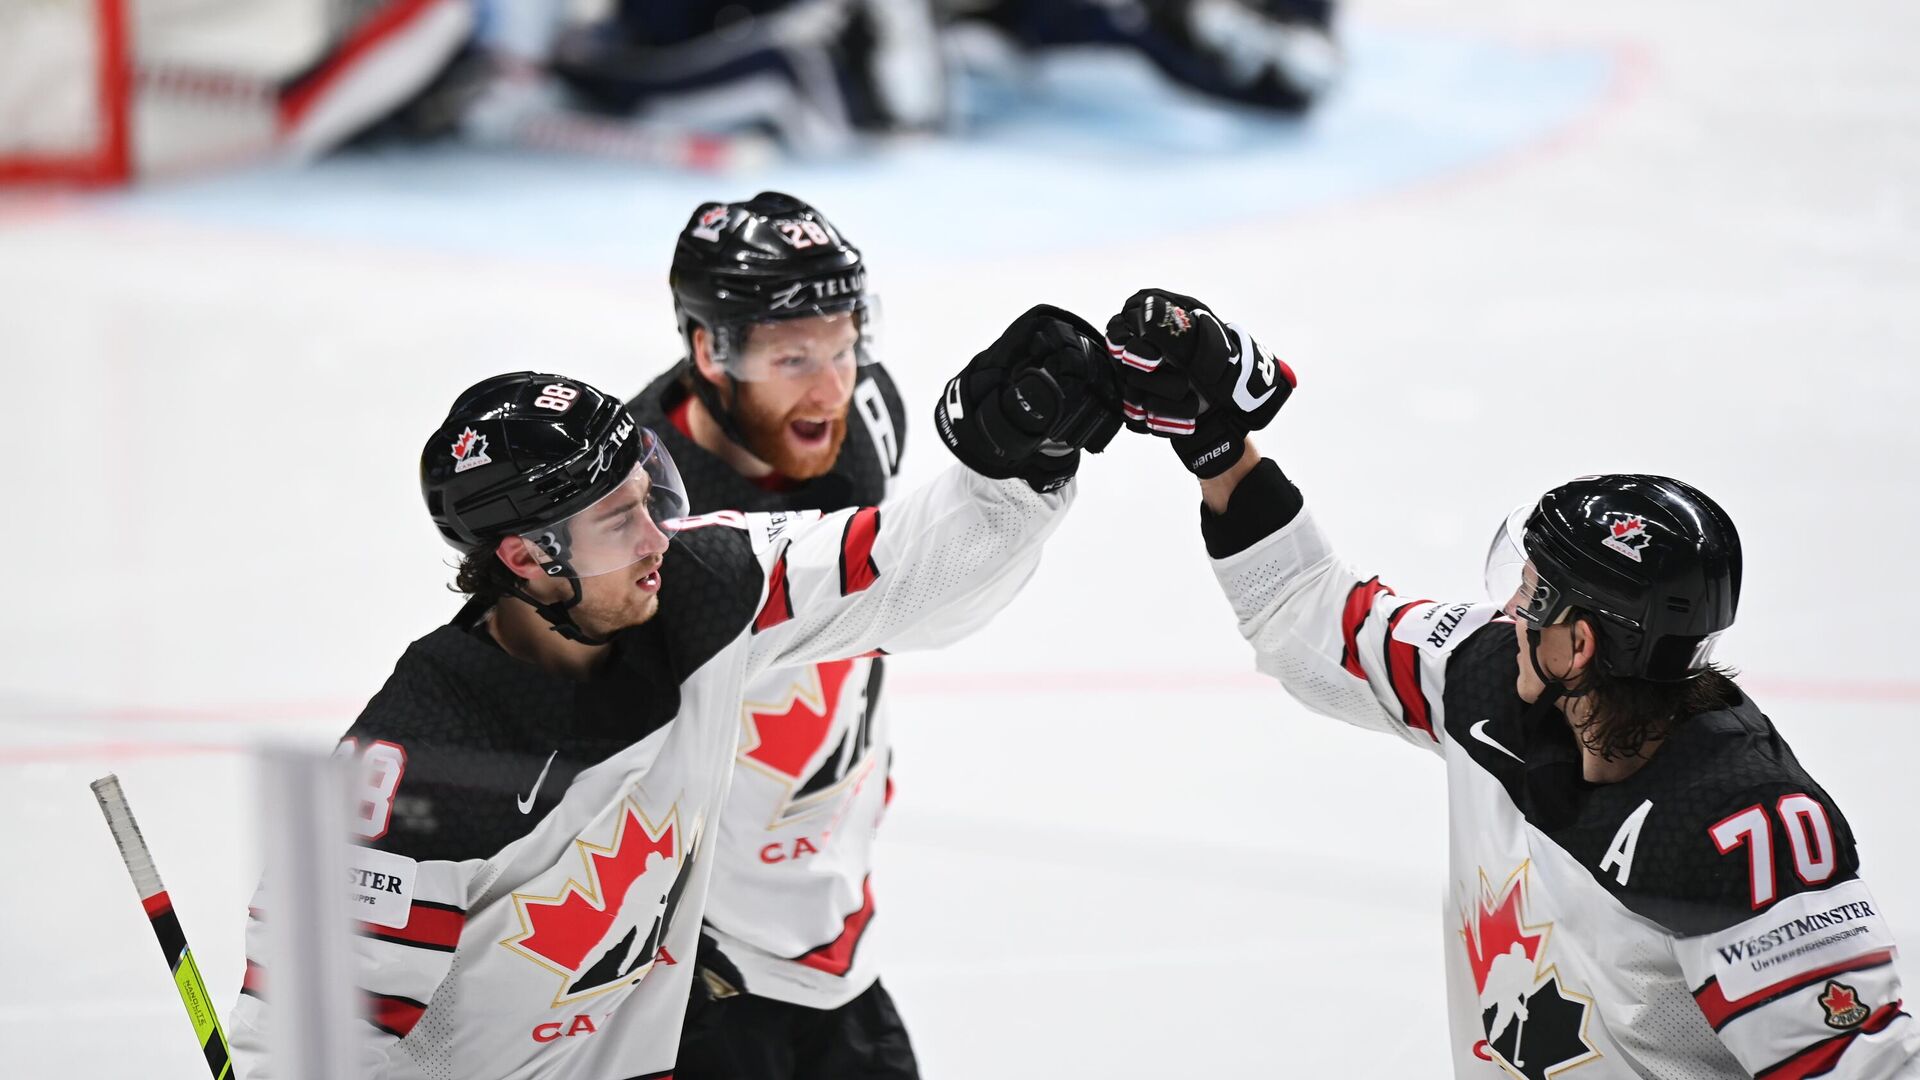 Результат хоккея канада. ЧМ хоккей 2021 сборная Канады. ЧМ по хоккею 2021 Канада Финляндия. Хоккеисты Канады 2021.